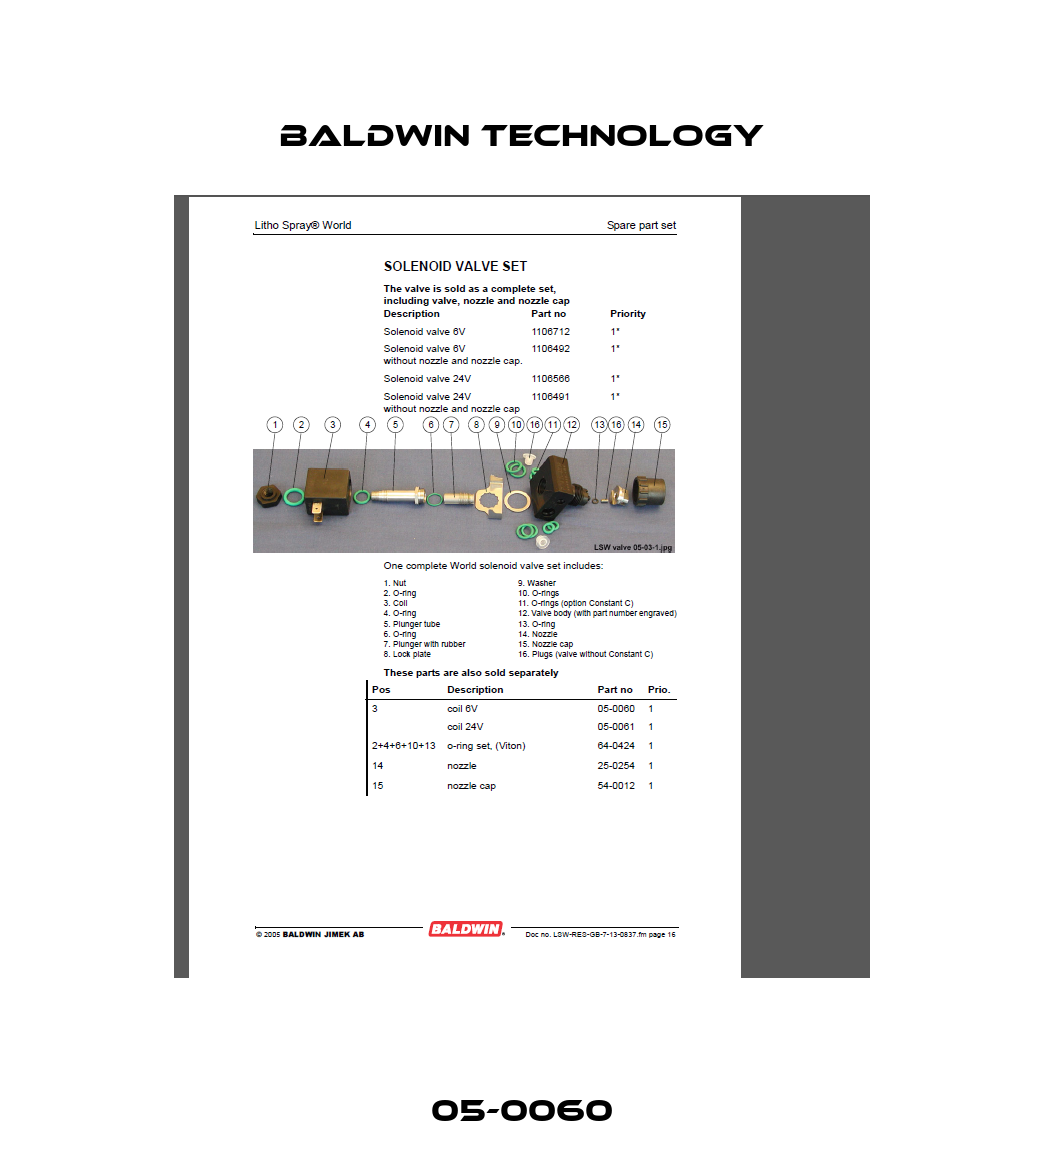 05-0060 Baldwin Technology